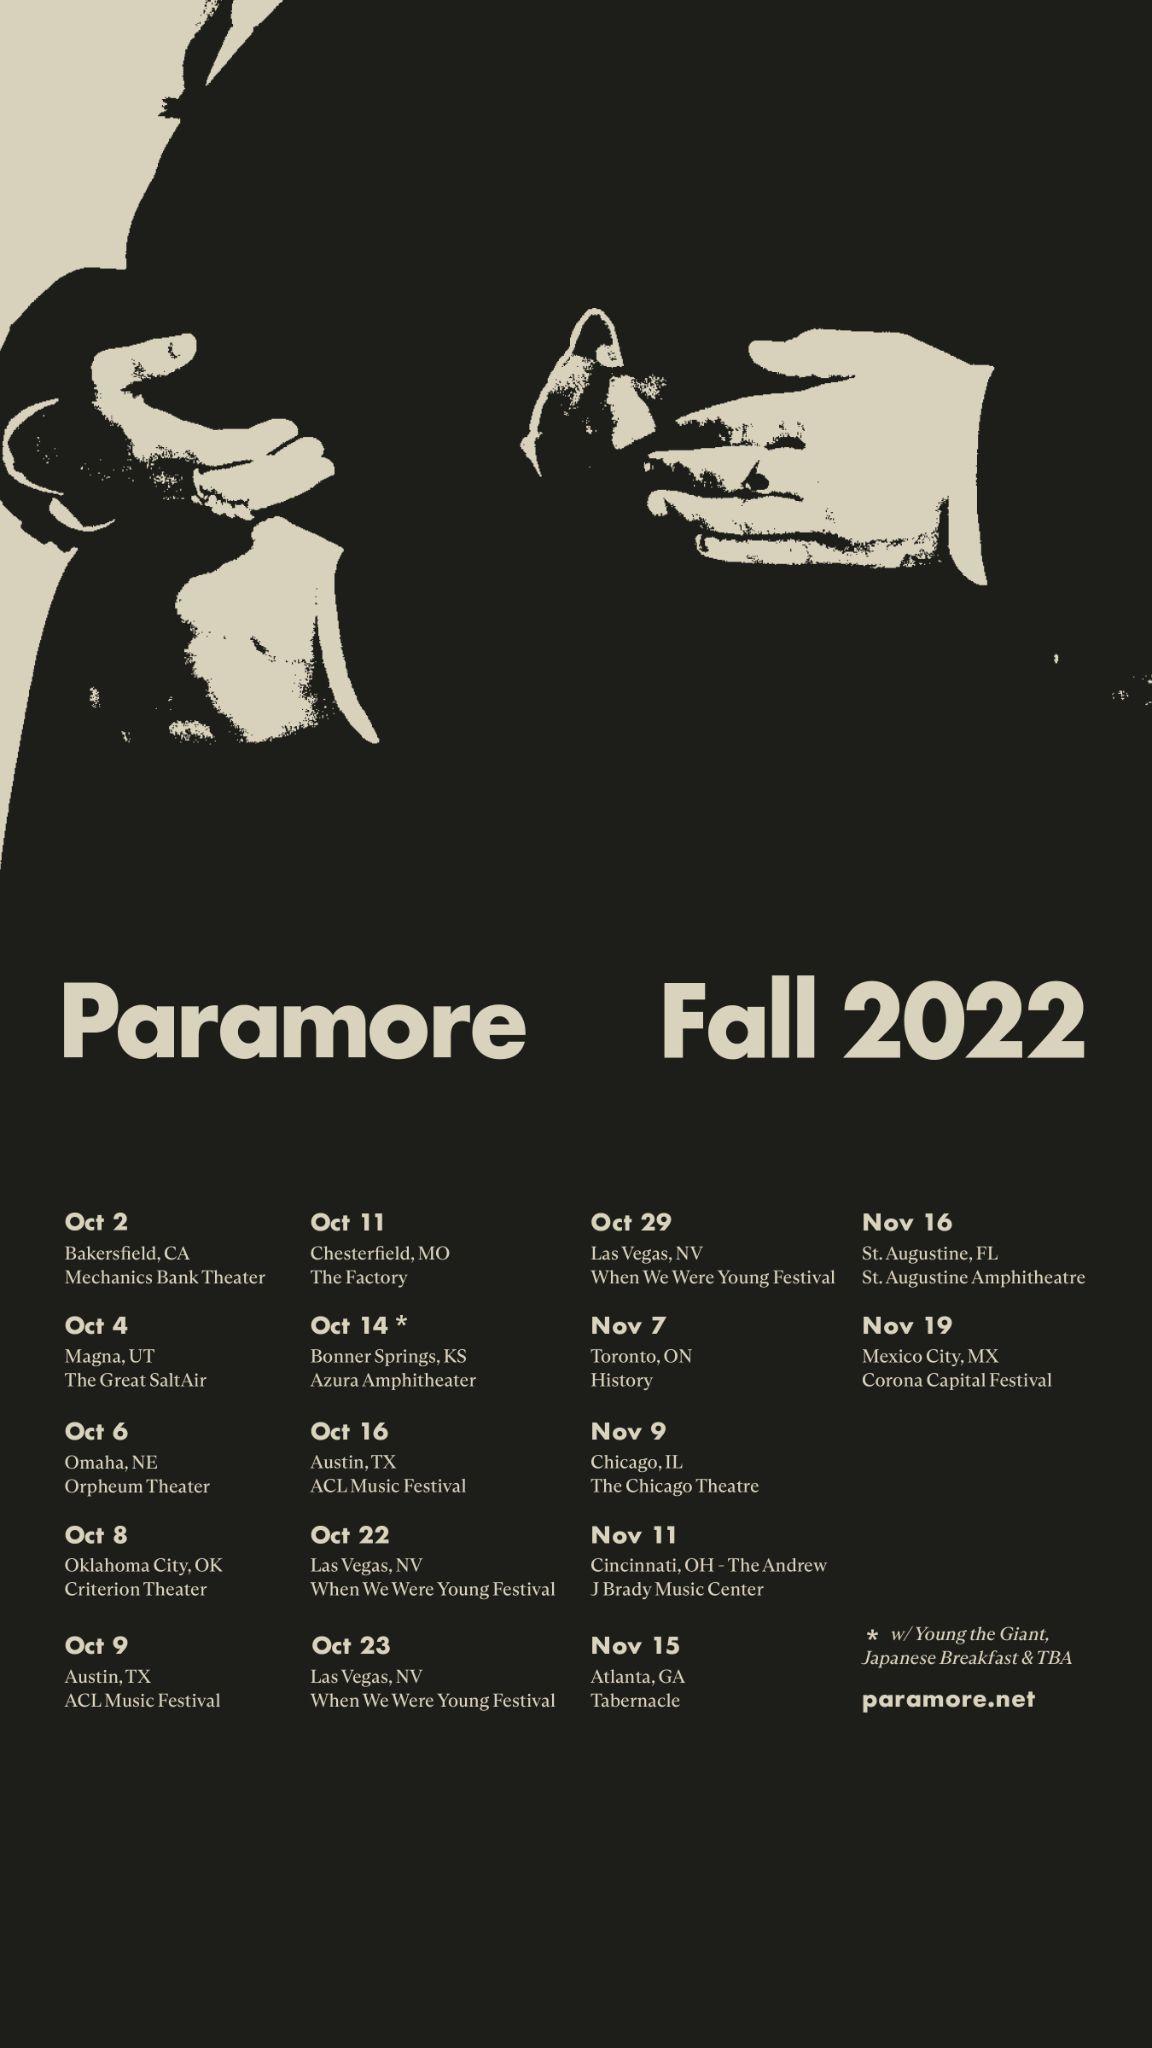 Paramore Fall 2022 Tour Dates